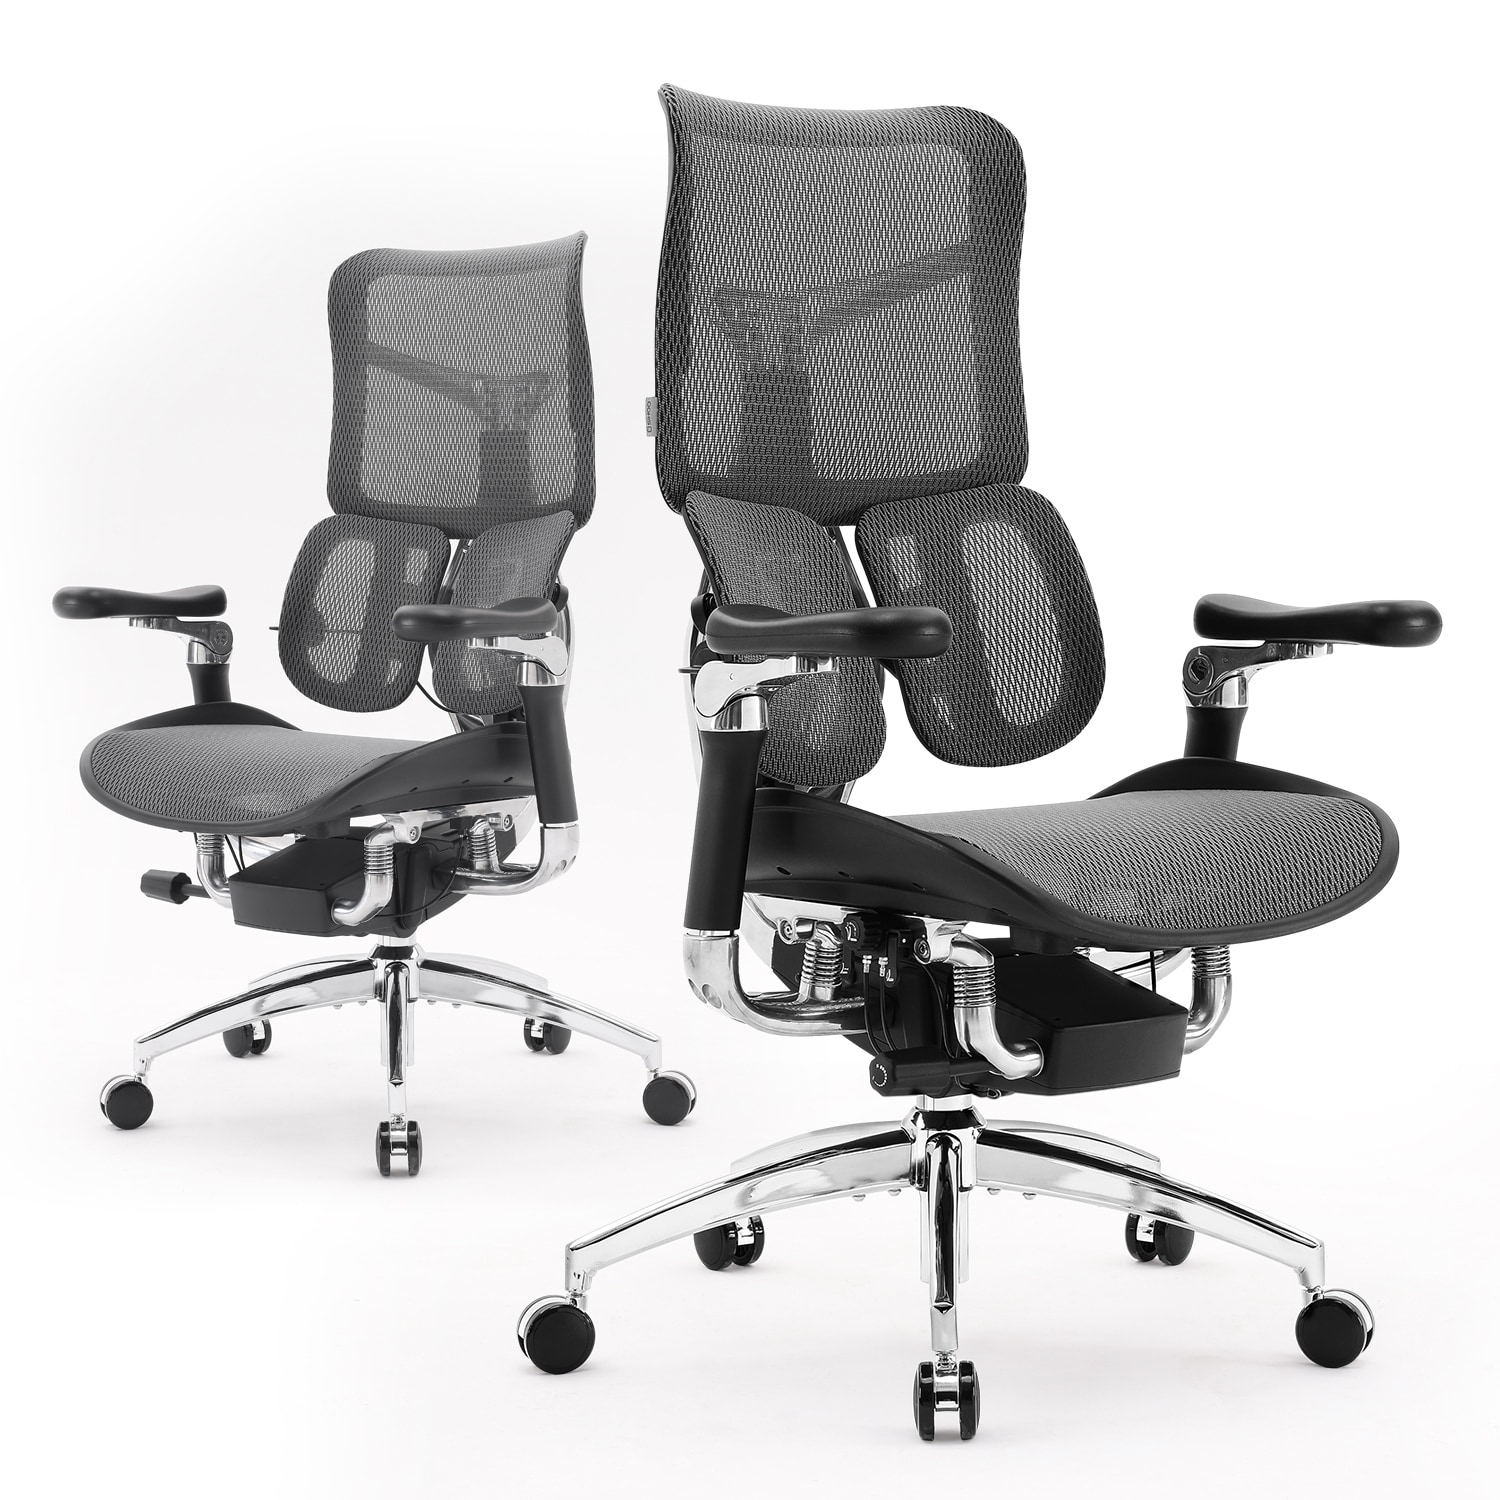 SIHOO Doro S300 Ergonomic Office Chair - Dual-layer Dynamic Lumbar